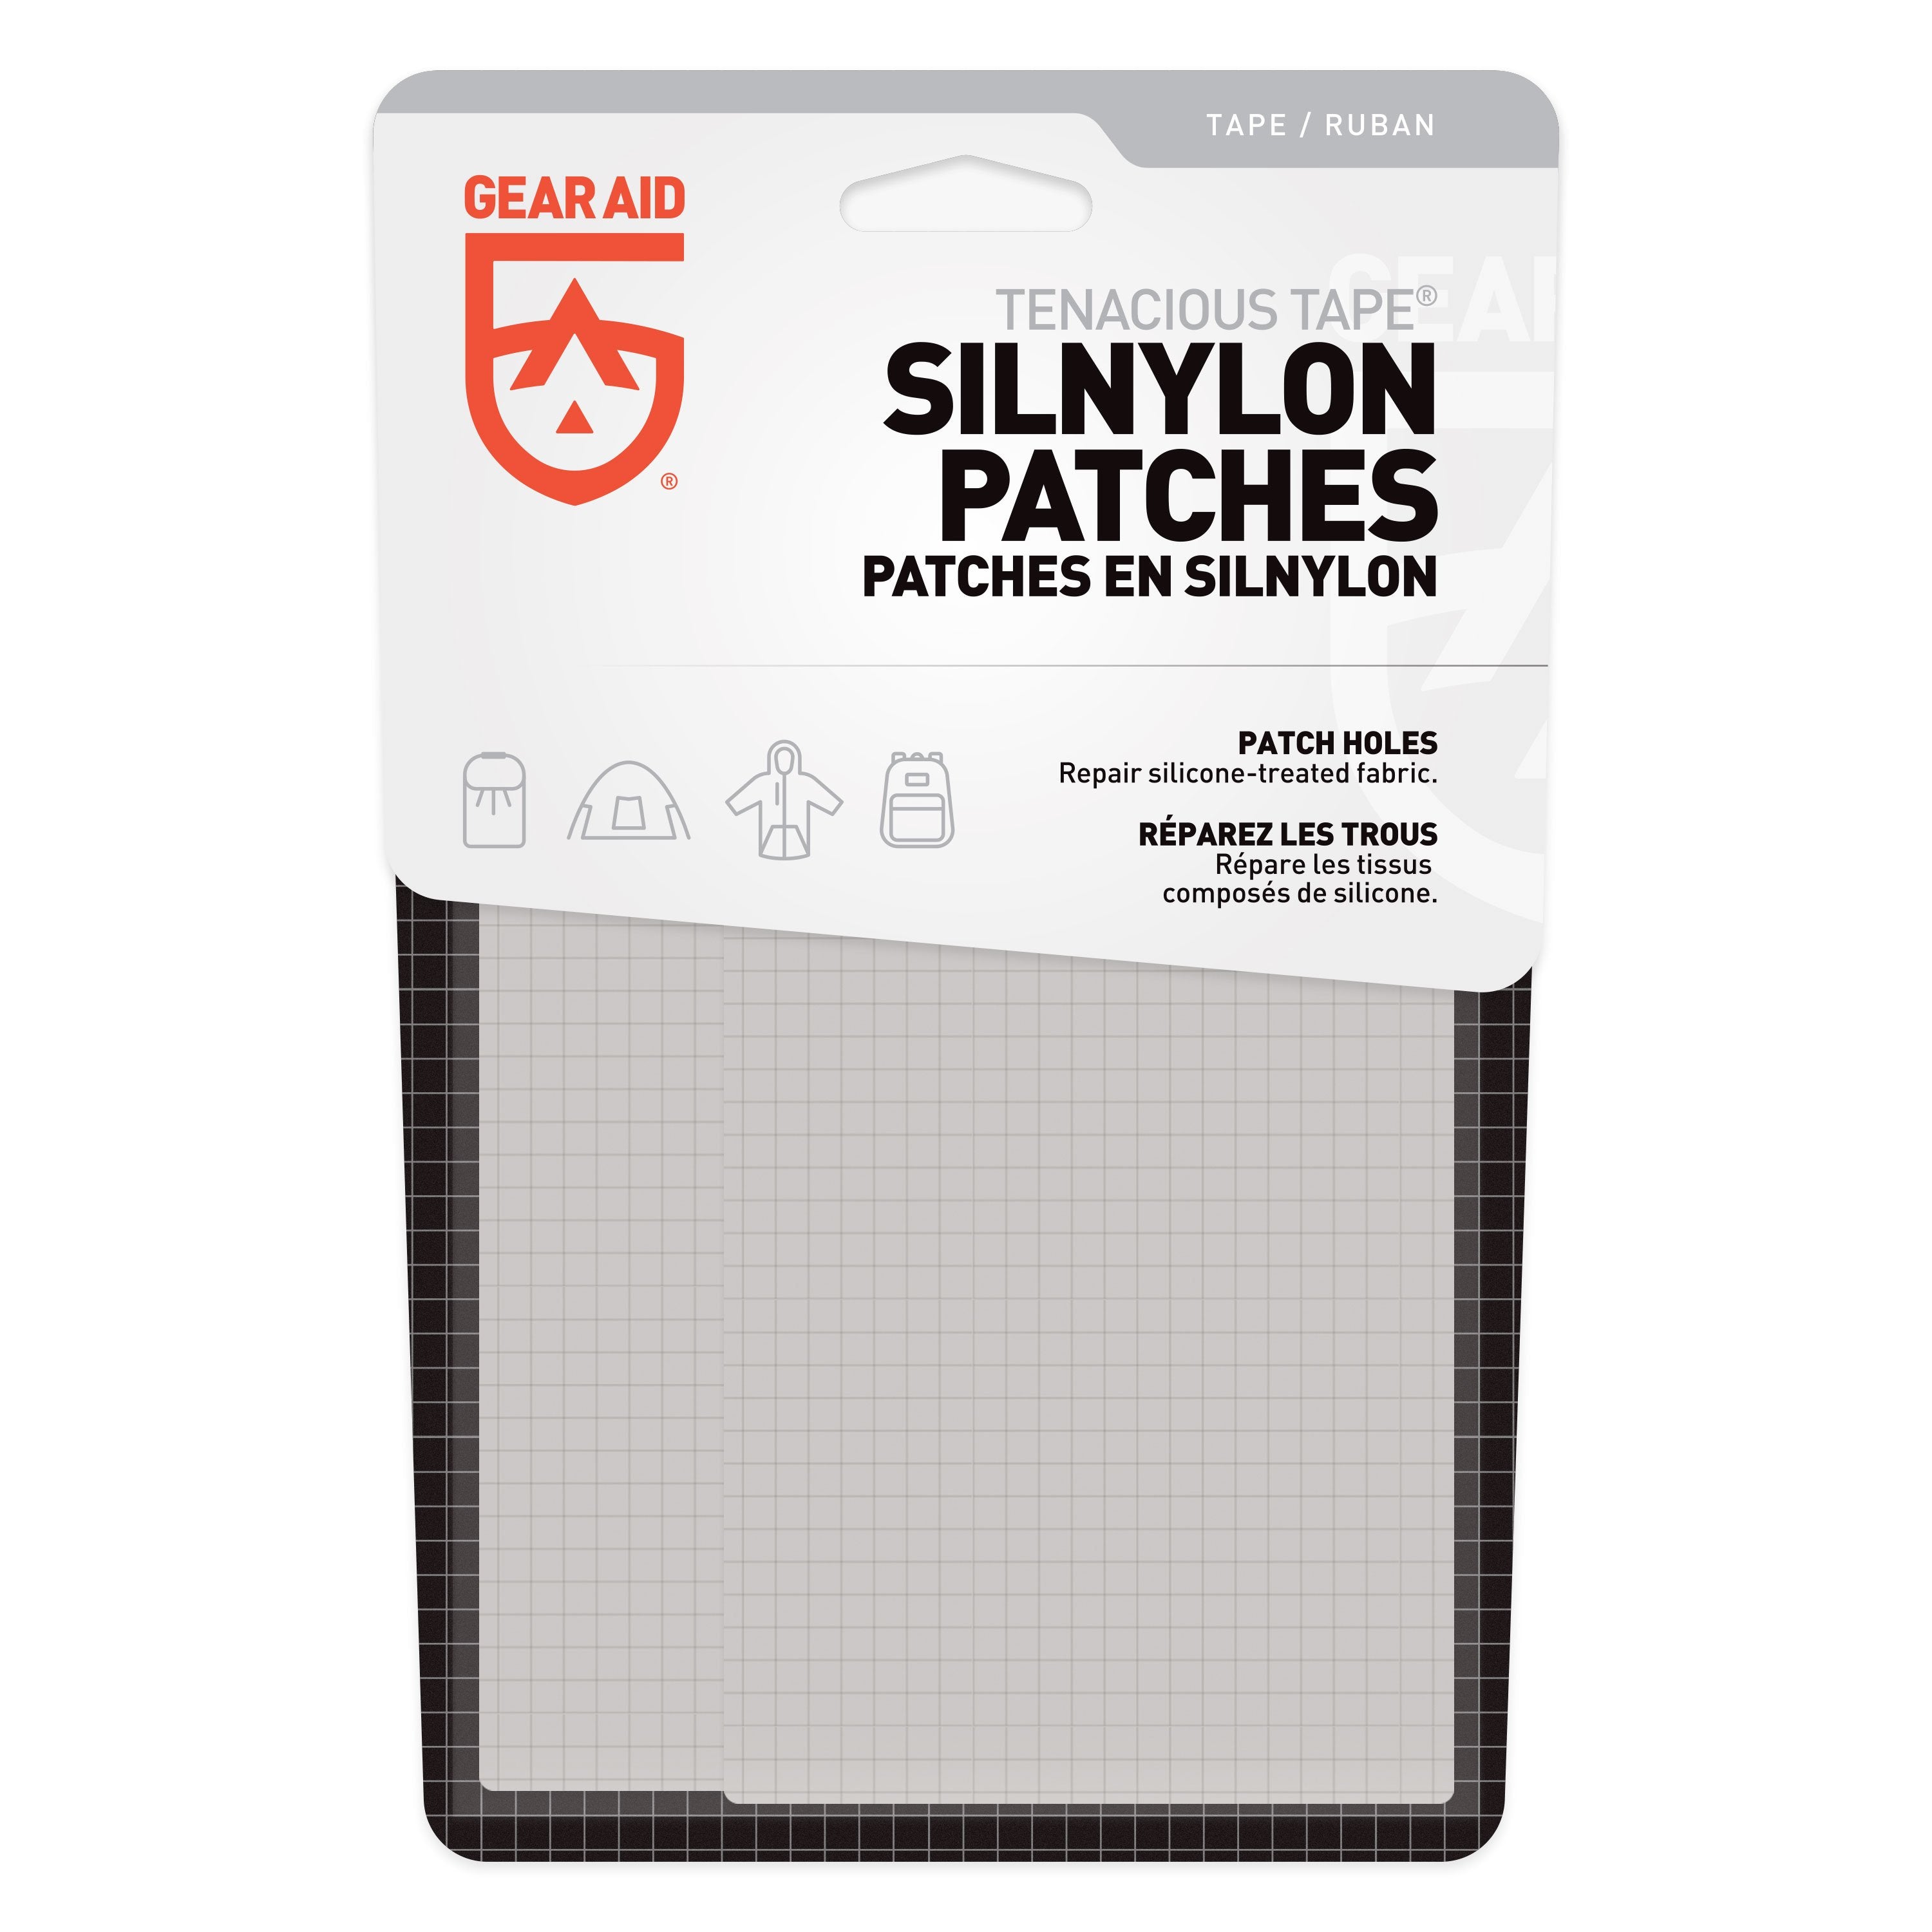 Tenacious Tape Silnylon Patches – Gossamer Gear